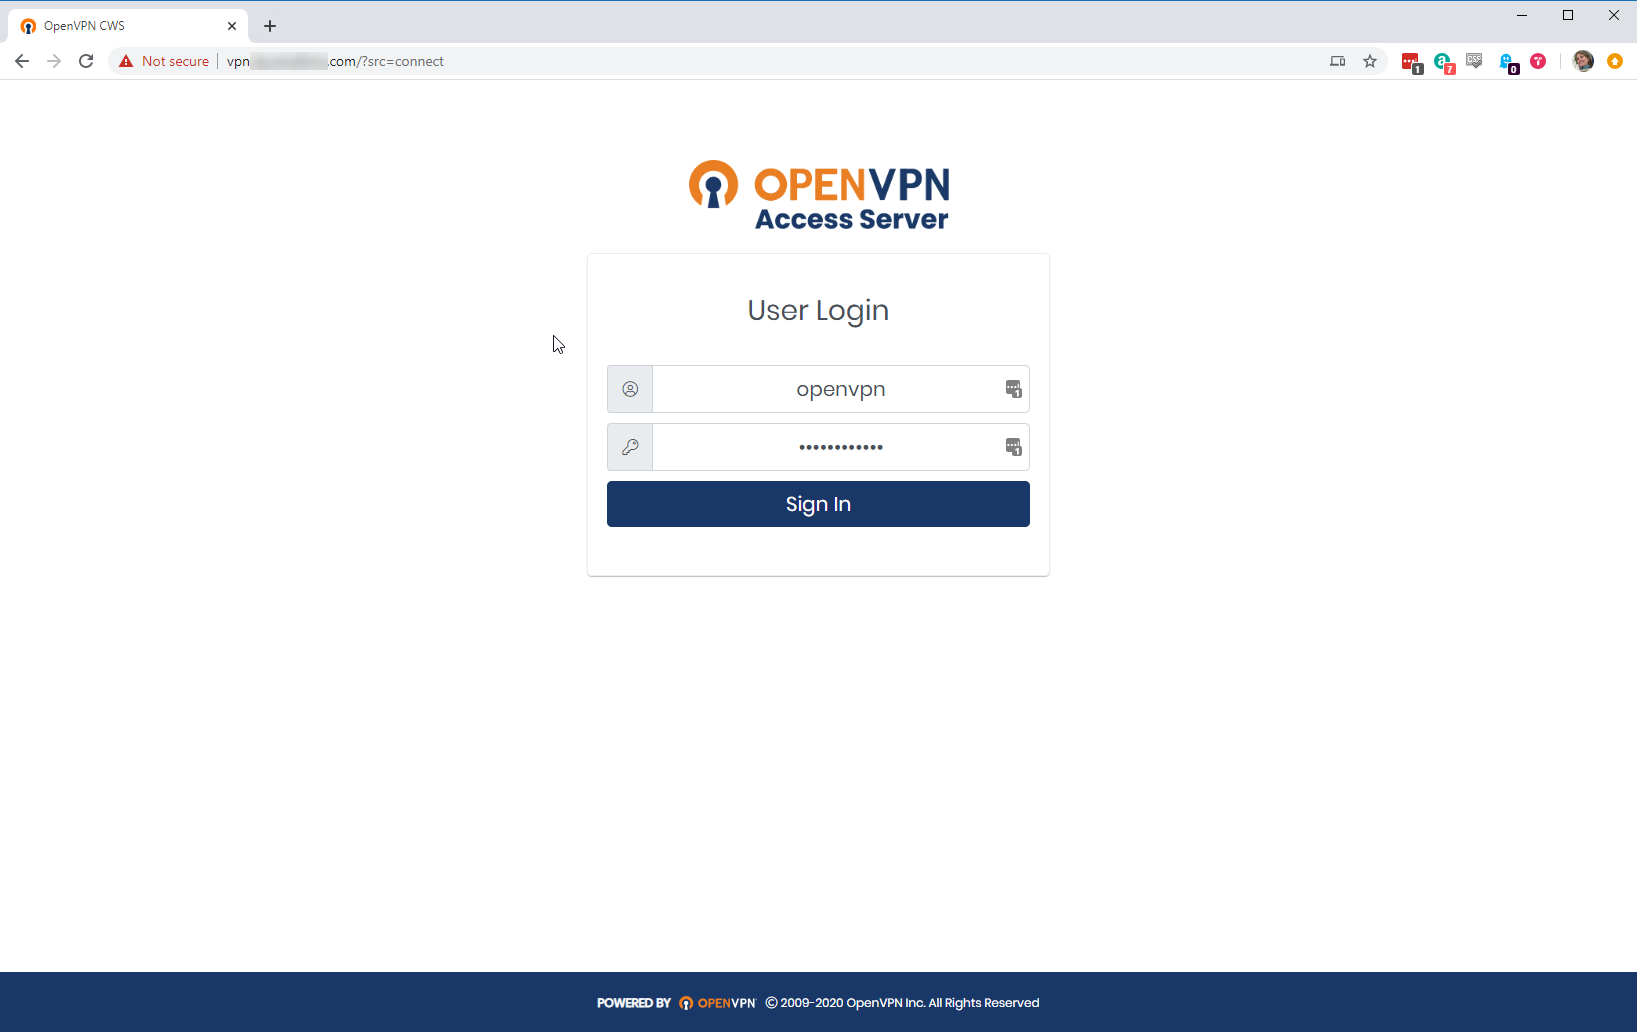 openvpn community web interface for metaframe